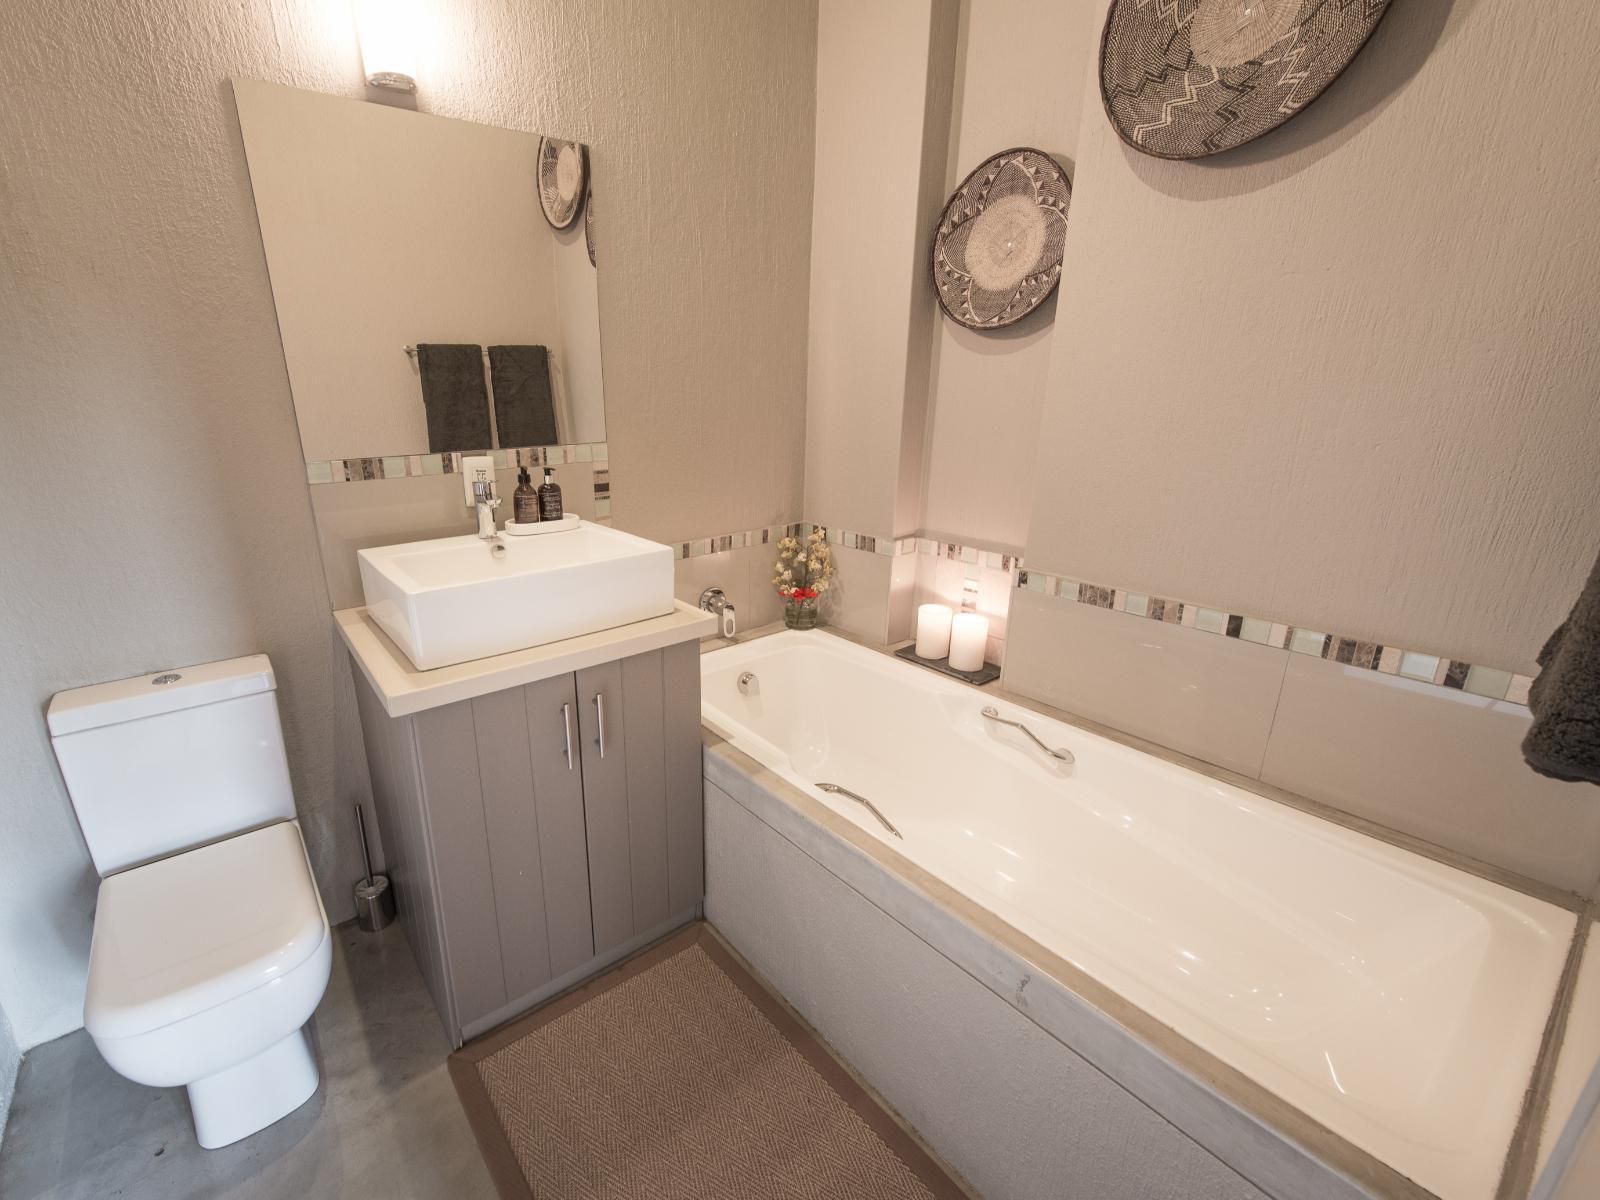 Ekhaya Bush Villa Hoedspruit Limpopo Province South Africa Bathroom